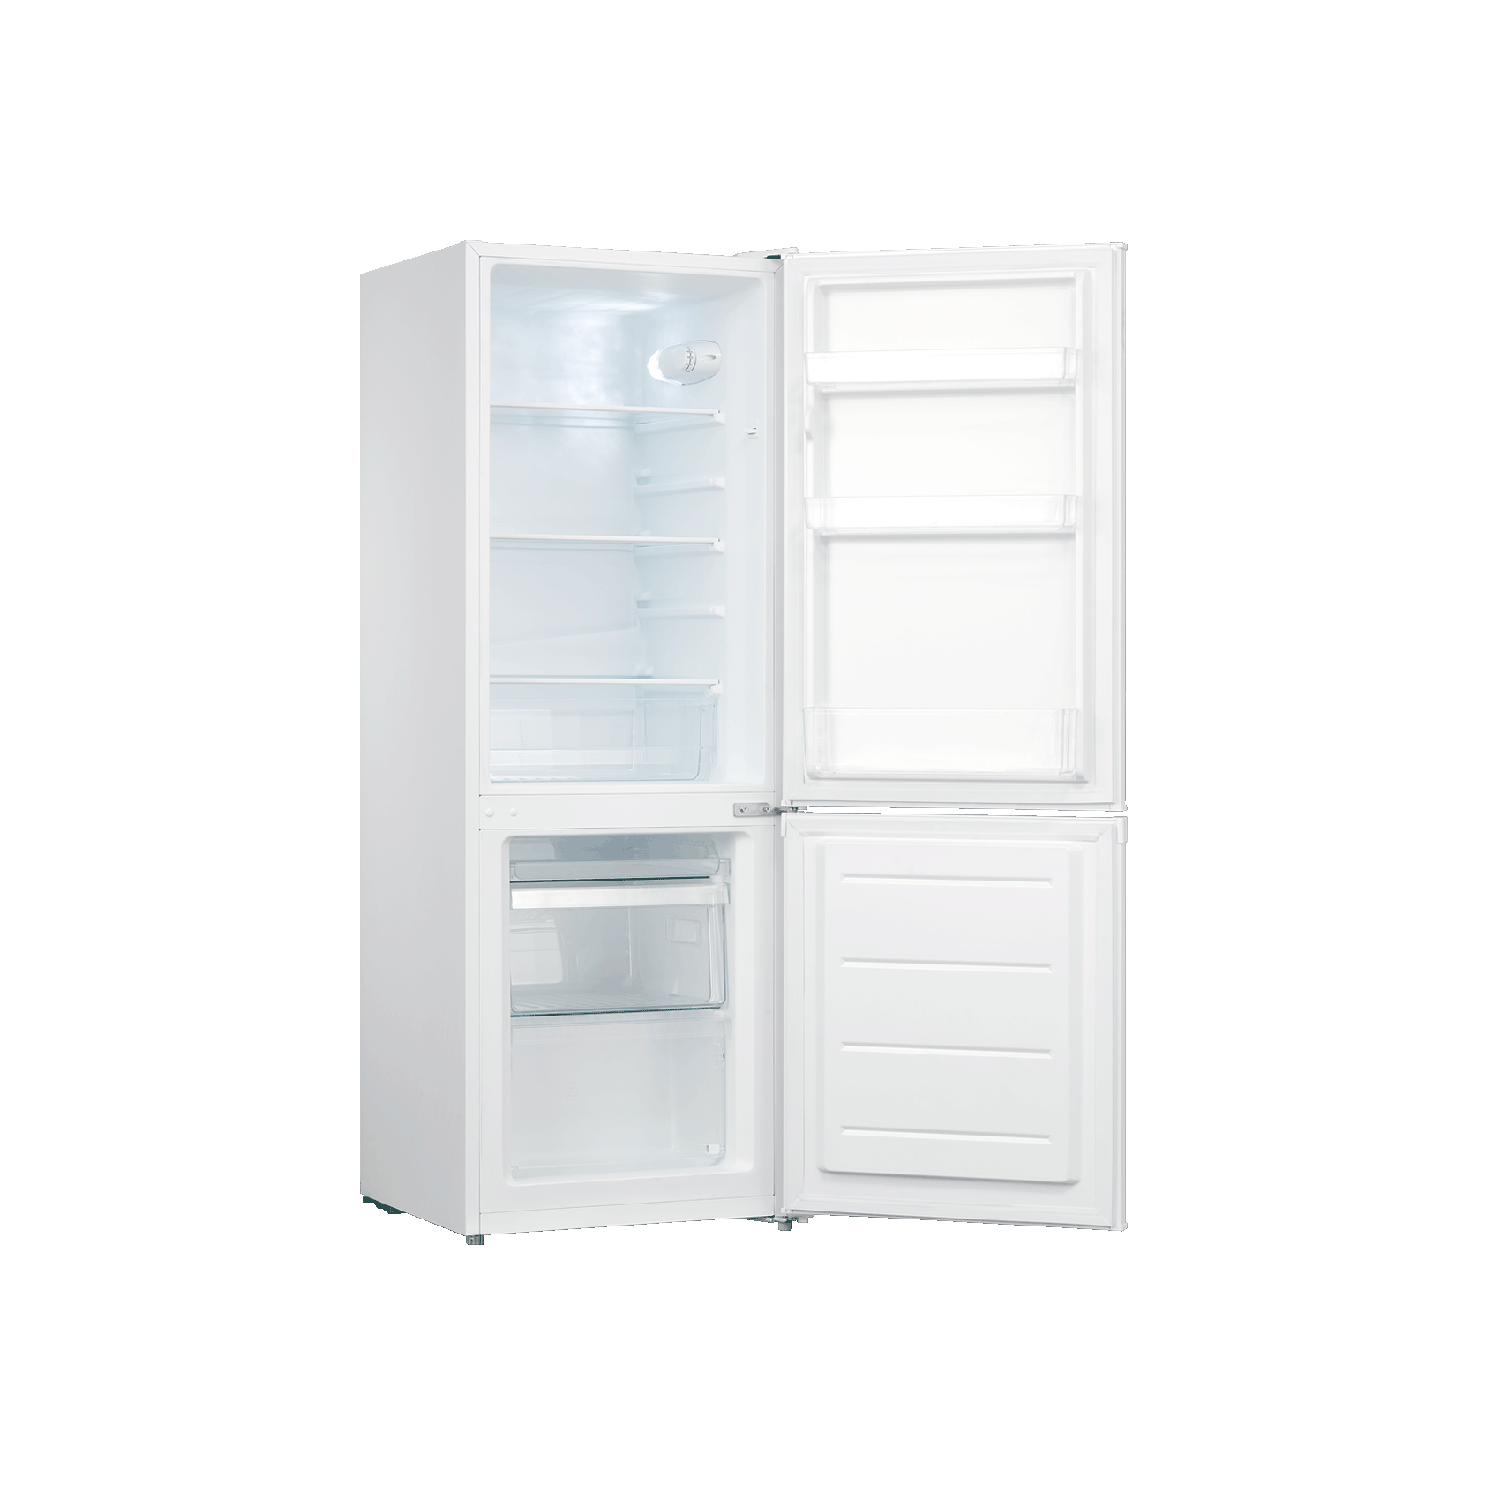 Comfee refrigerator RCC100WH(E) chest freezer 99L cold static 41dB, mini  fridge, refrigerators and freezers, cosmetic fridge, cabinet freezer, room  fridge Fridge storage, small apartment freezer, room fridge